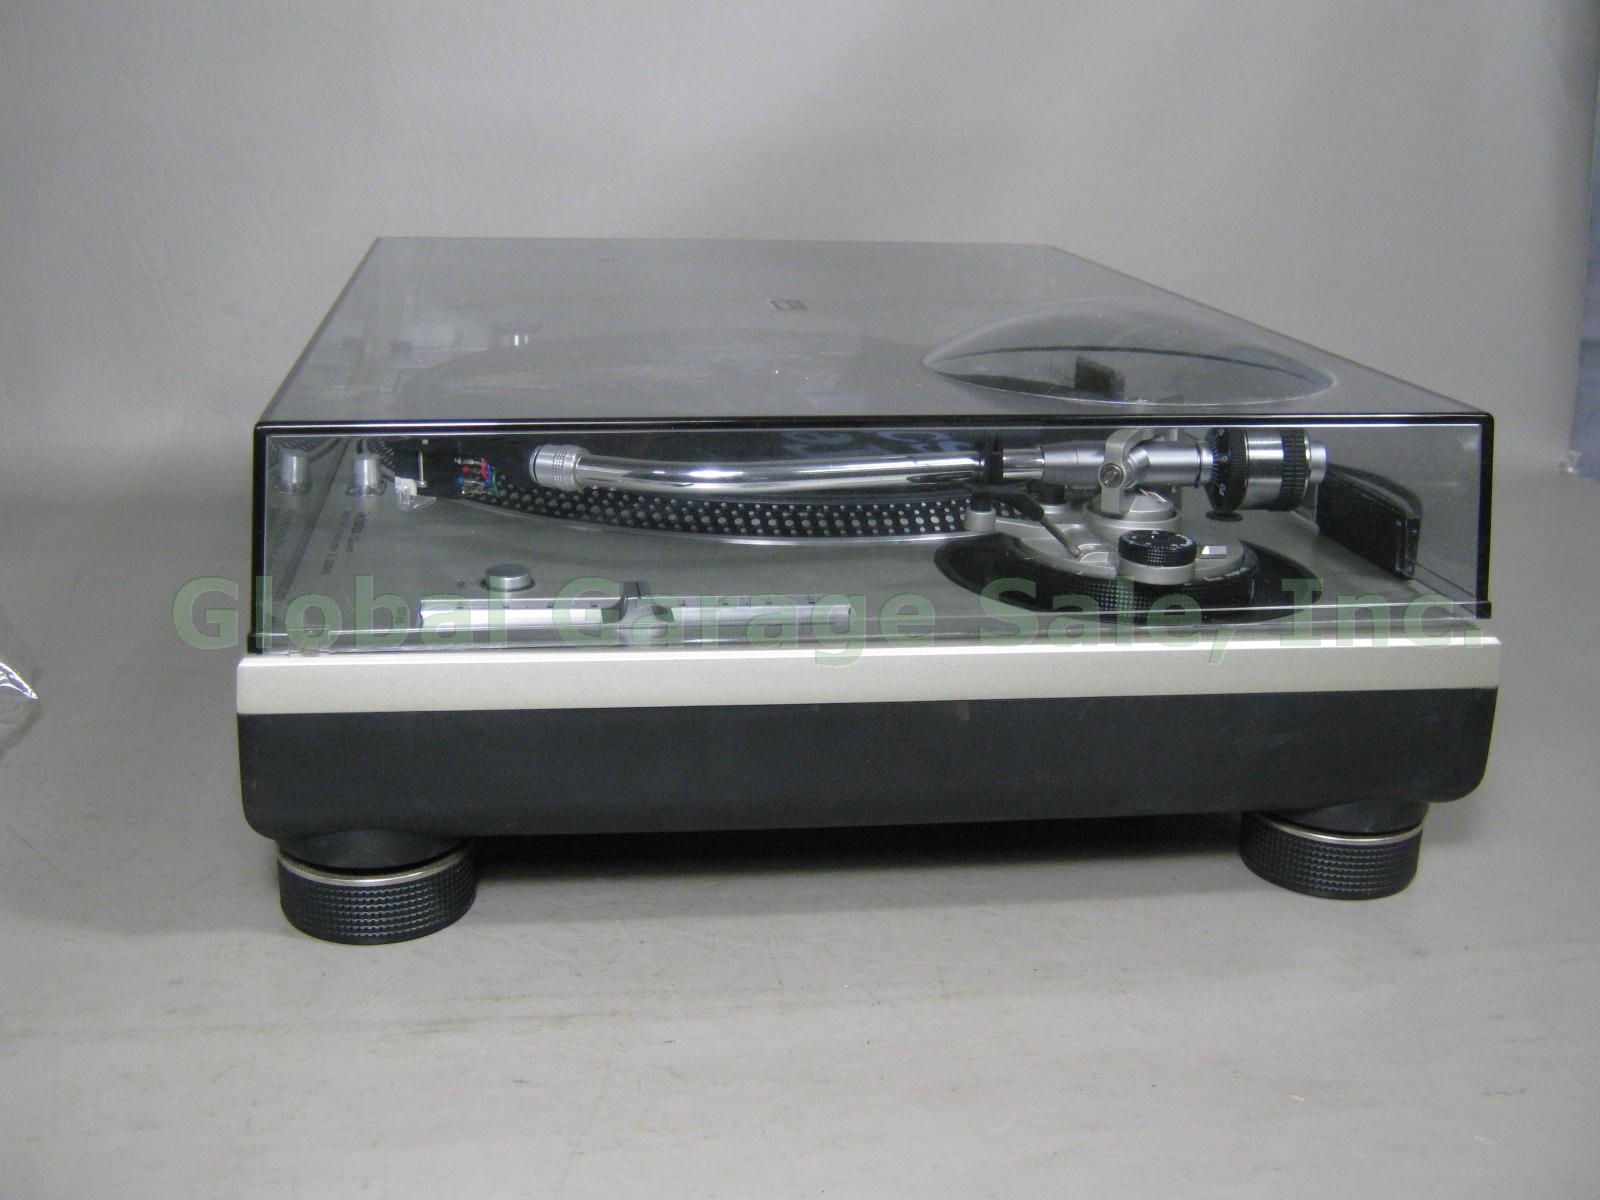 Technics SL-1200MK5 Quartz Direct Drive Pro DJ Turntable 1 Owner Original Box NR 5